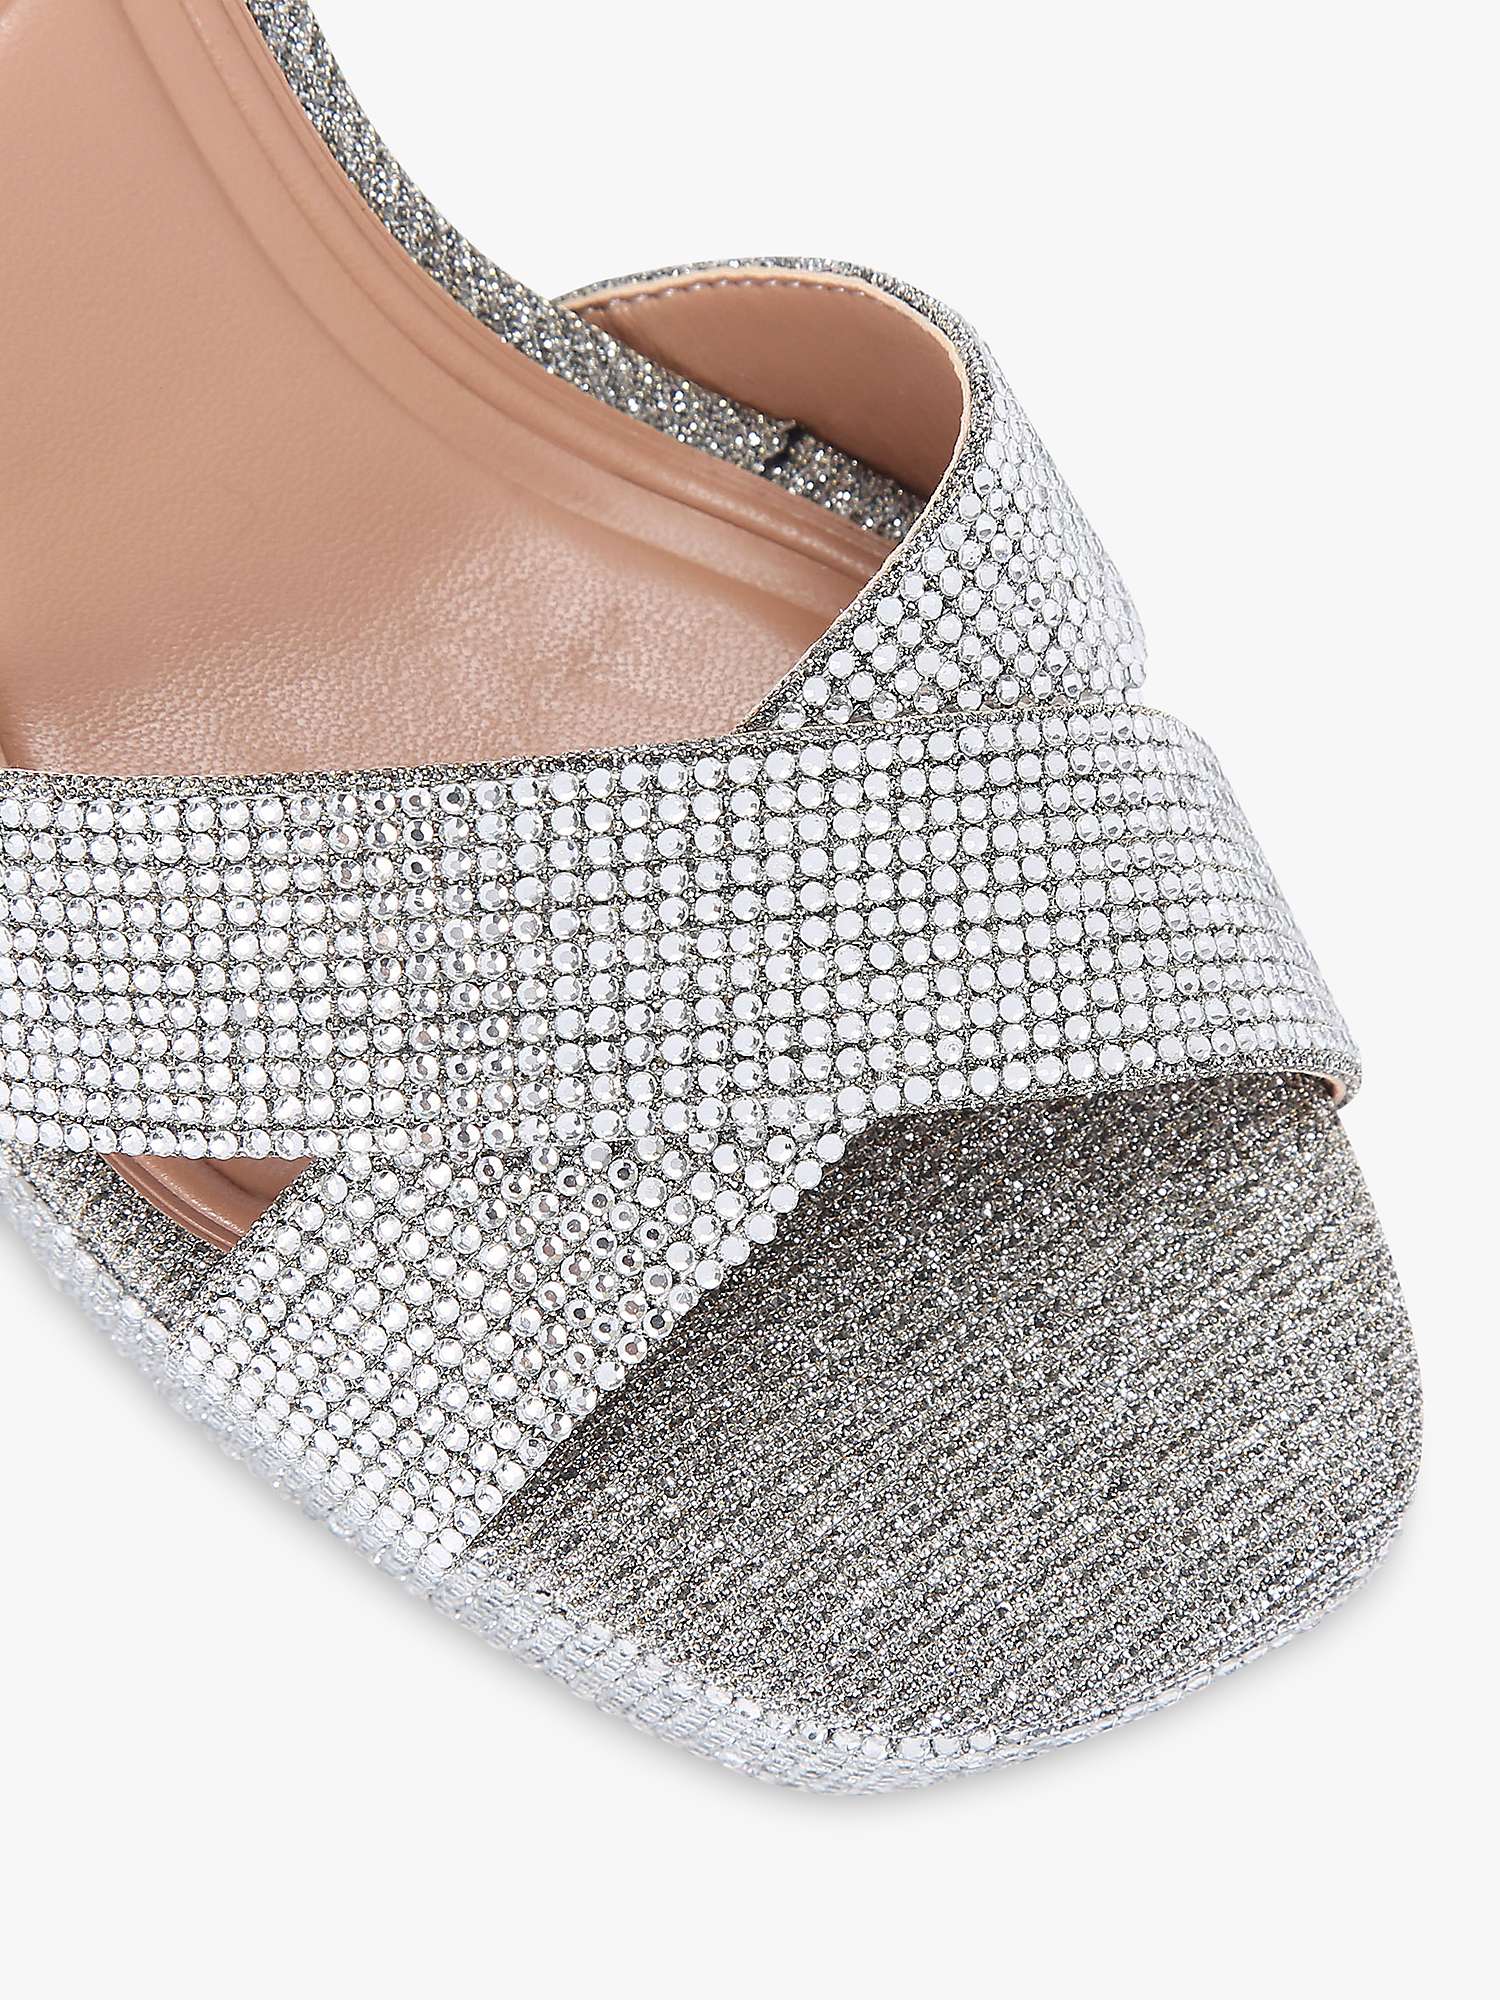 Buy Carvela Serafina Jewel Block Heel Sandals, Silver Online at johnlewis.com